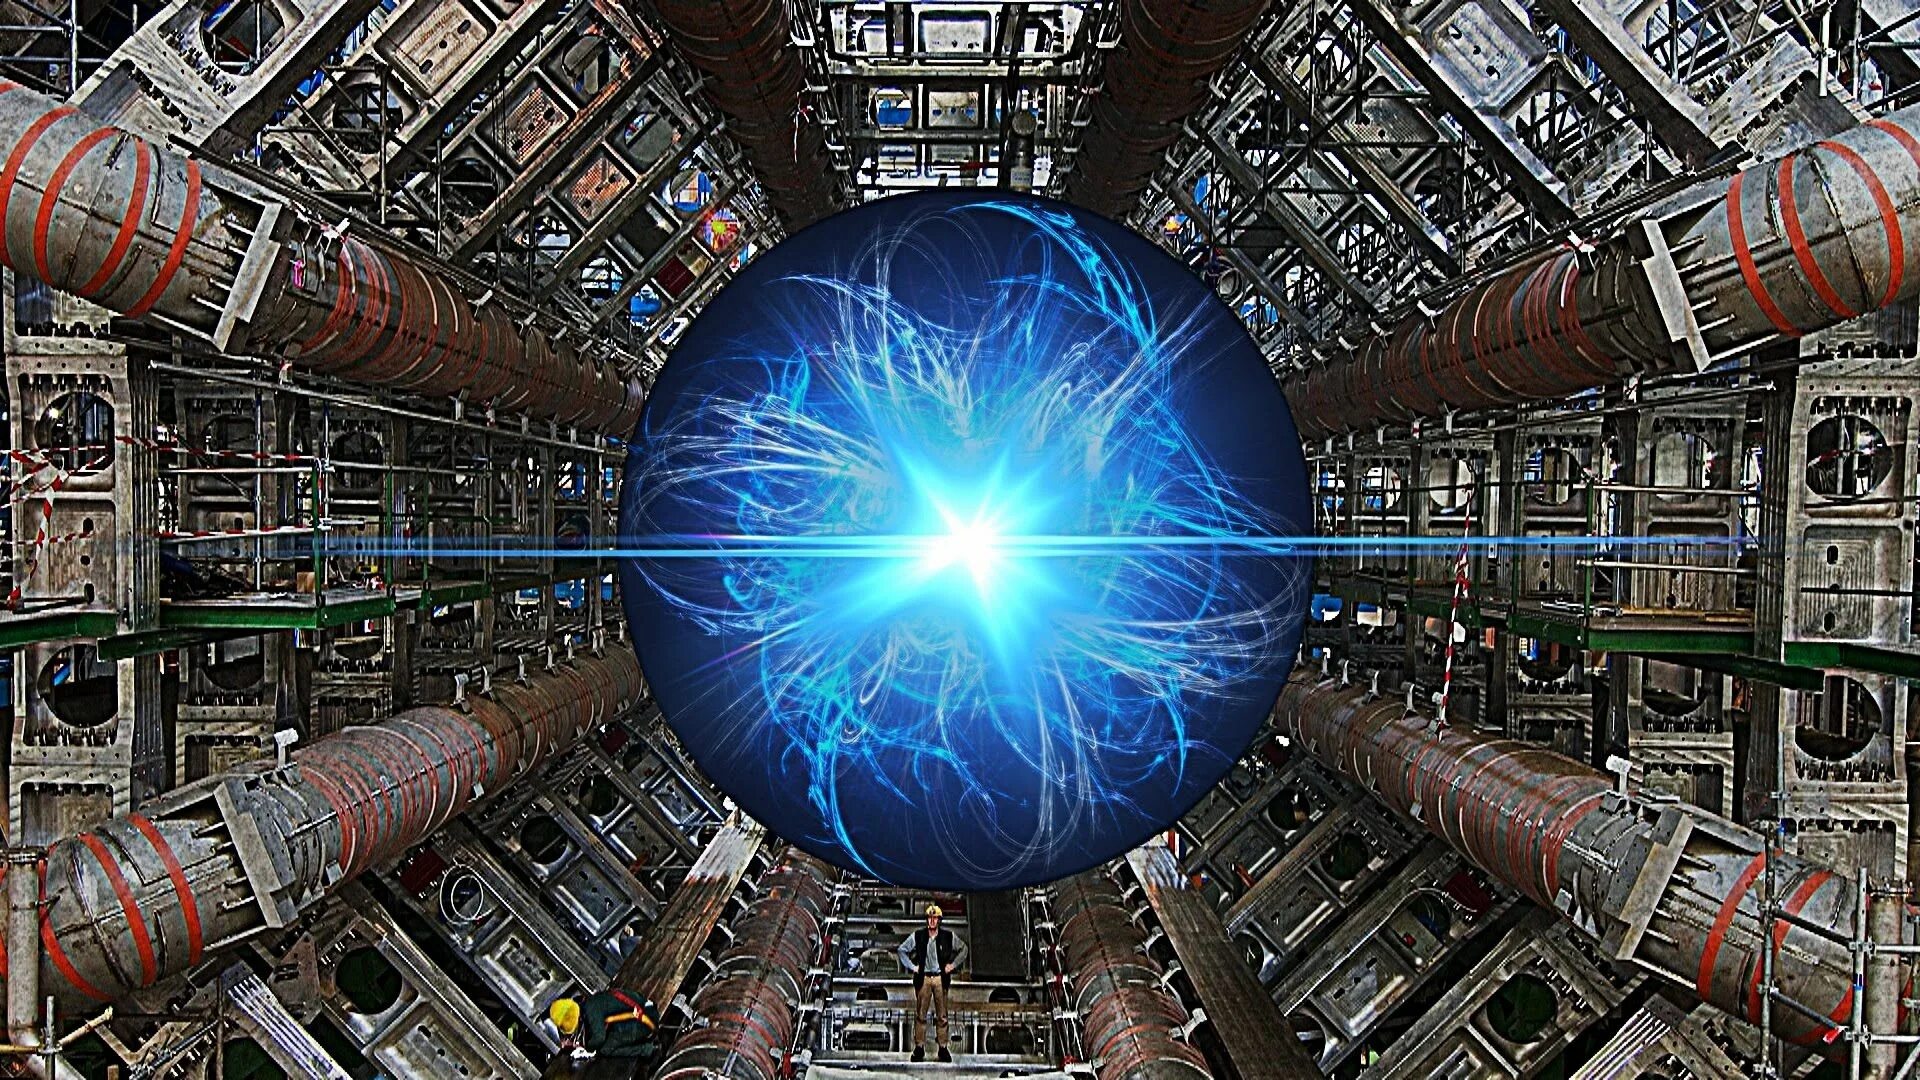 Ускоритель атомных частиц. ЦЕРН коллайдер. ЦЕРН Женева коллайдер. Адронный коллайдер в Женеве. Большой адронный коллайдер ЦЕРН.